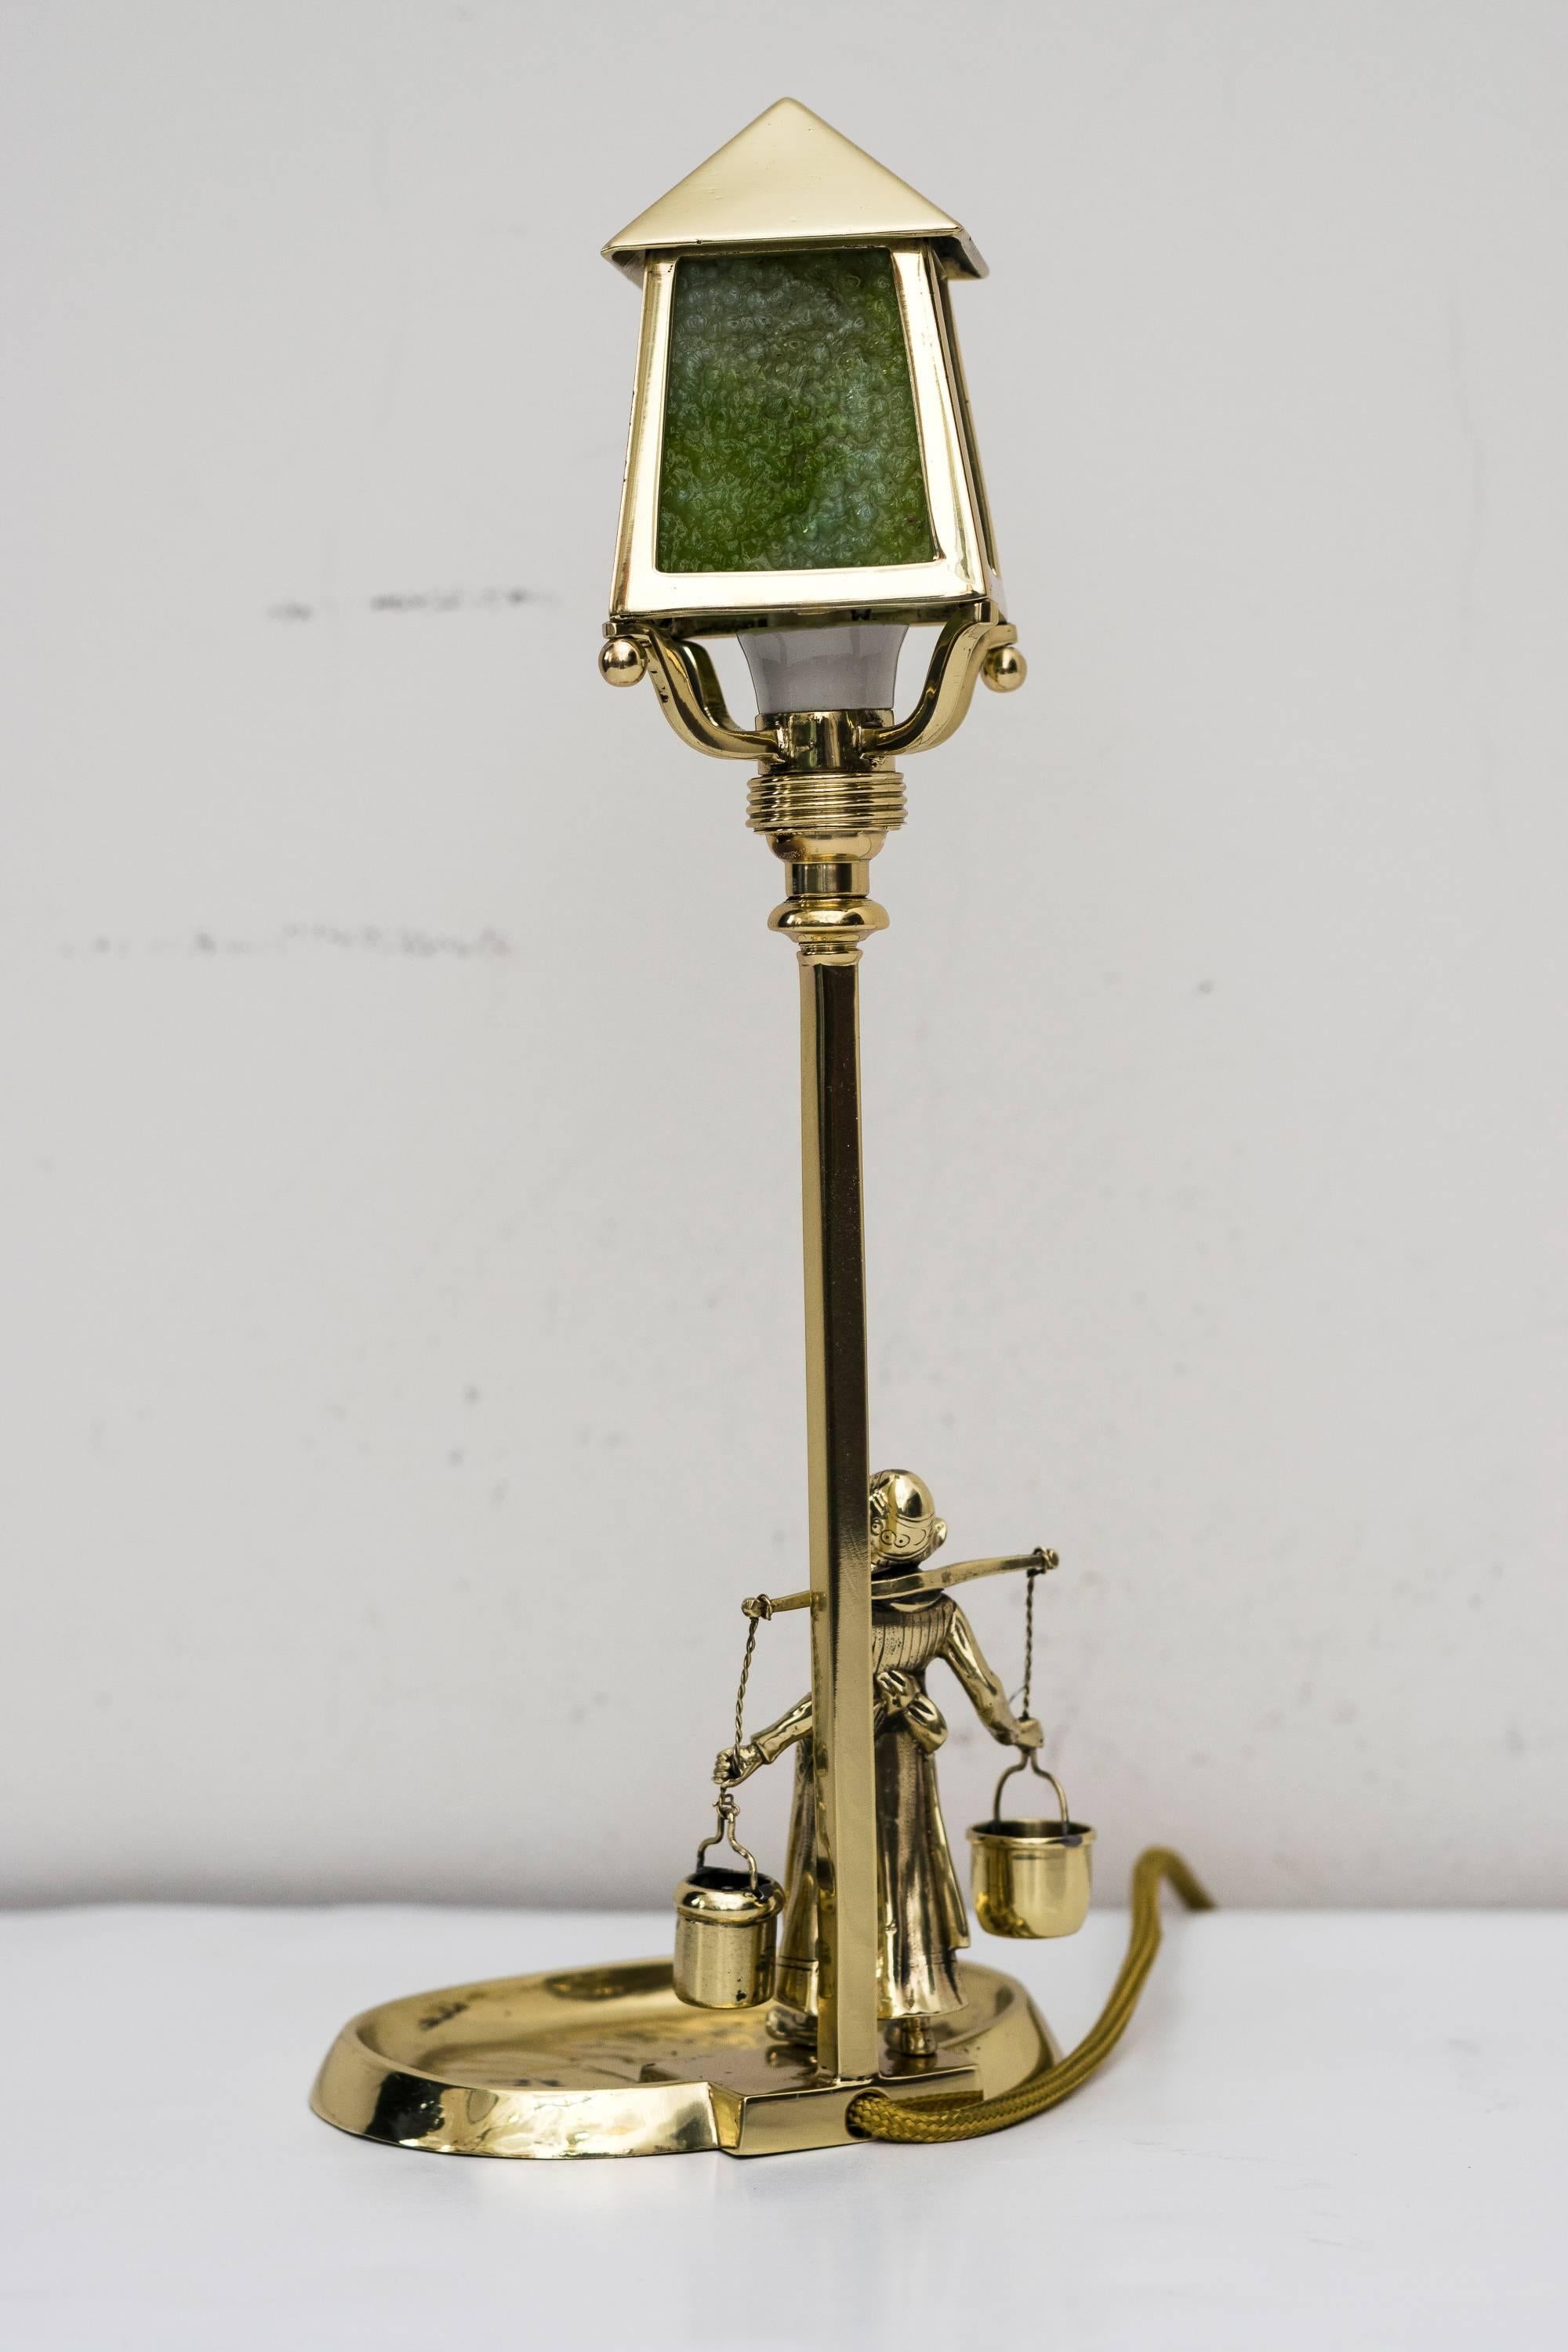 Jugendstil table lamp with green opaline glass
polished and stove enamelled.